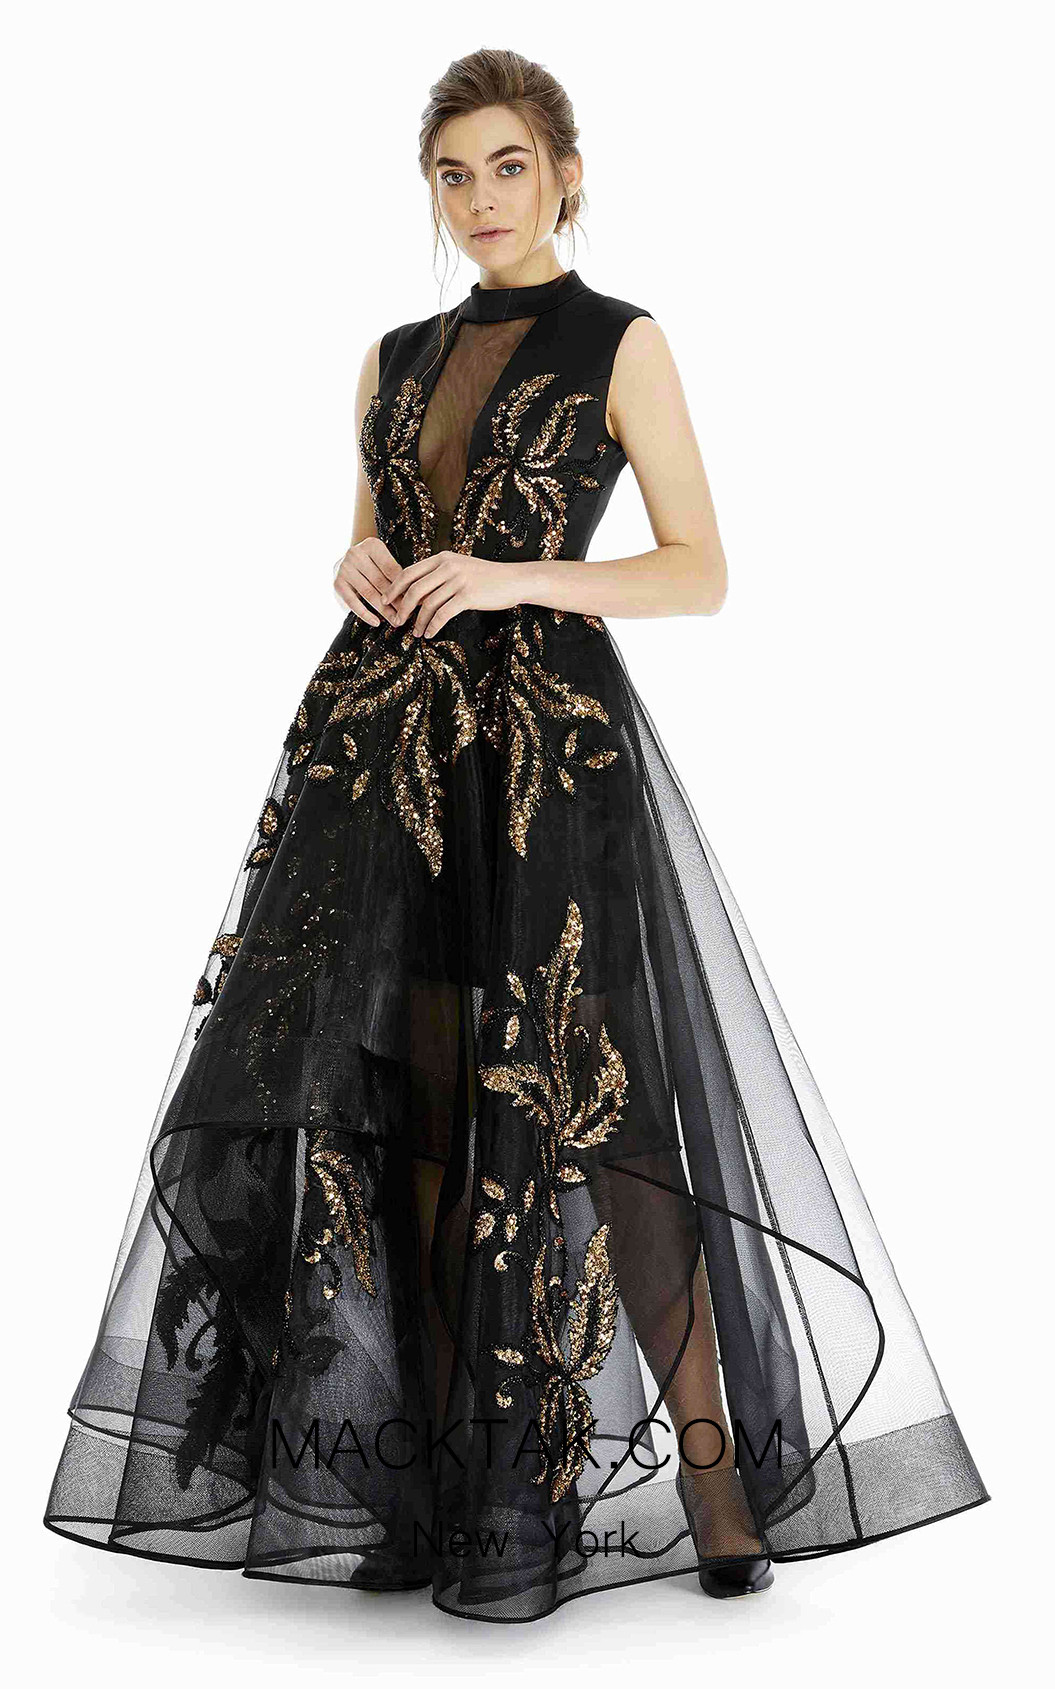 MackTak Couture 4624 Dress